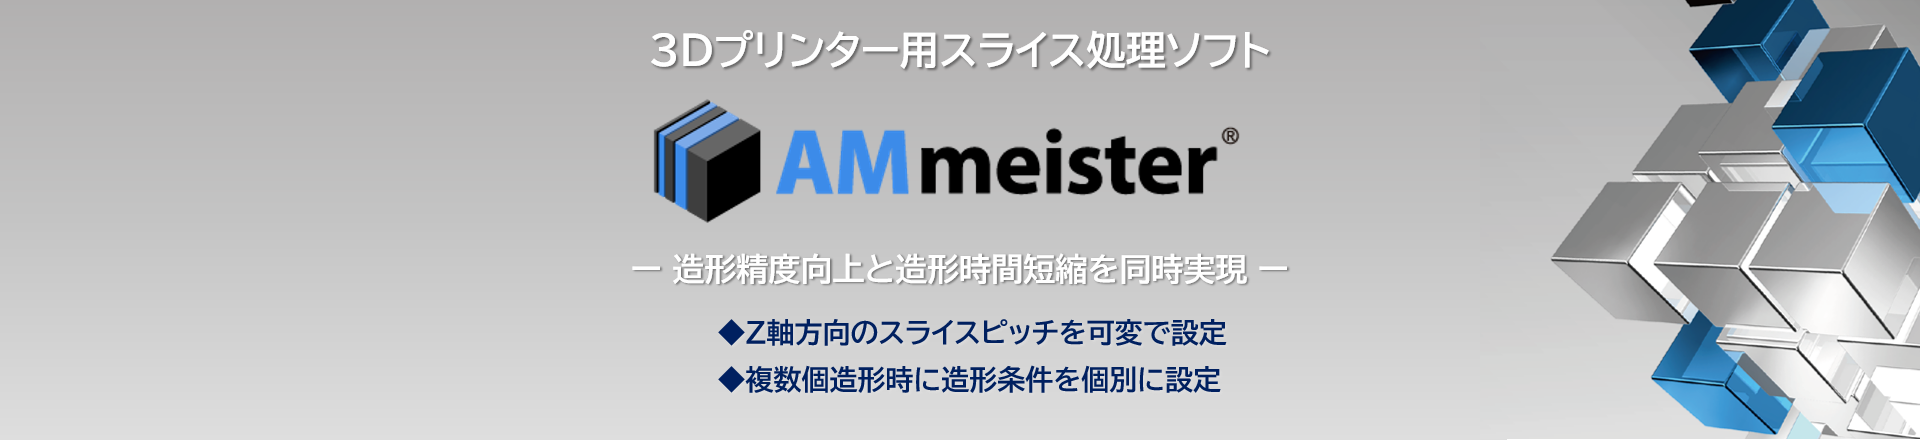 AMmeister 3Dプリンター用スライス処理ソフト